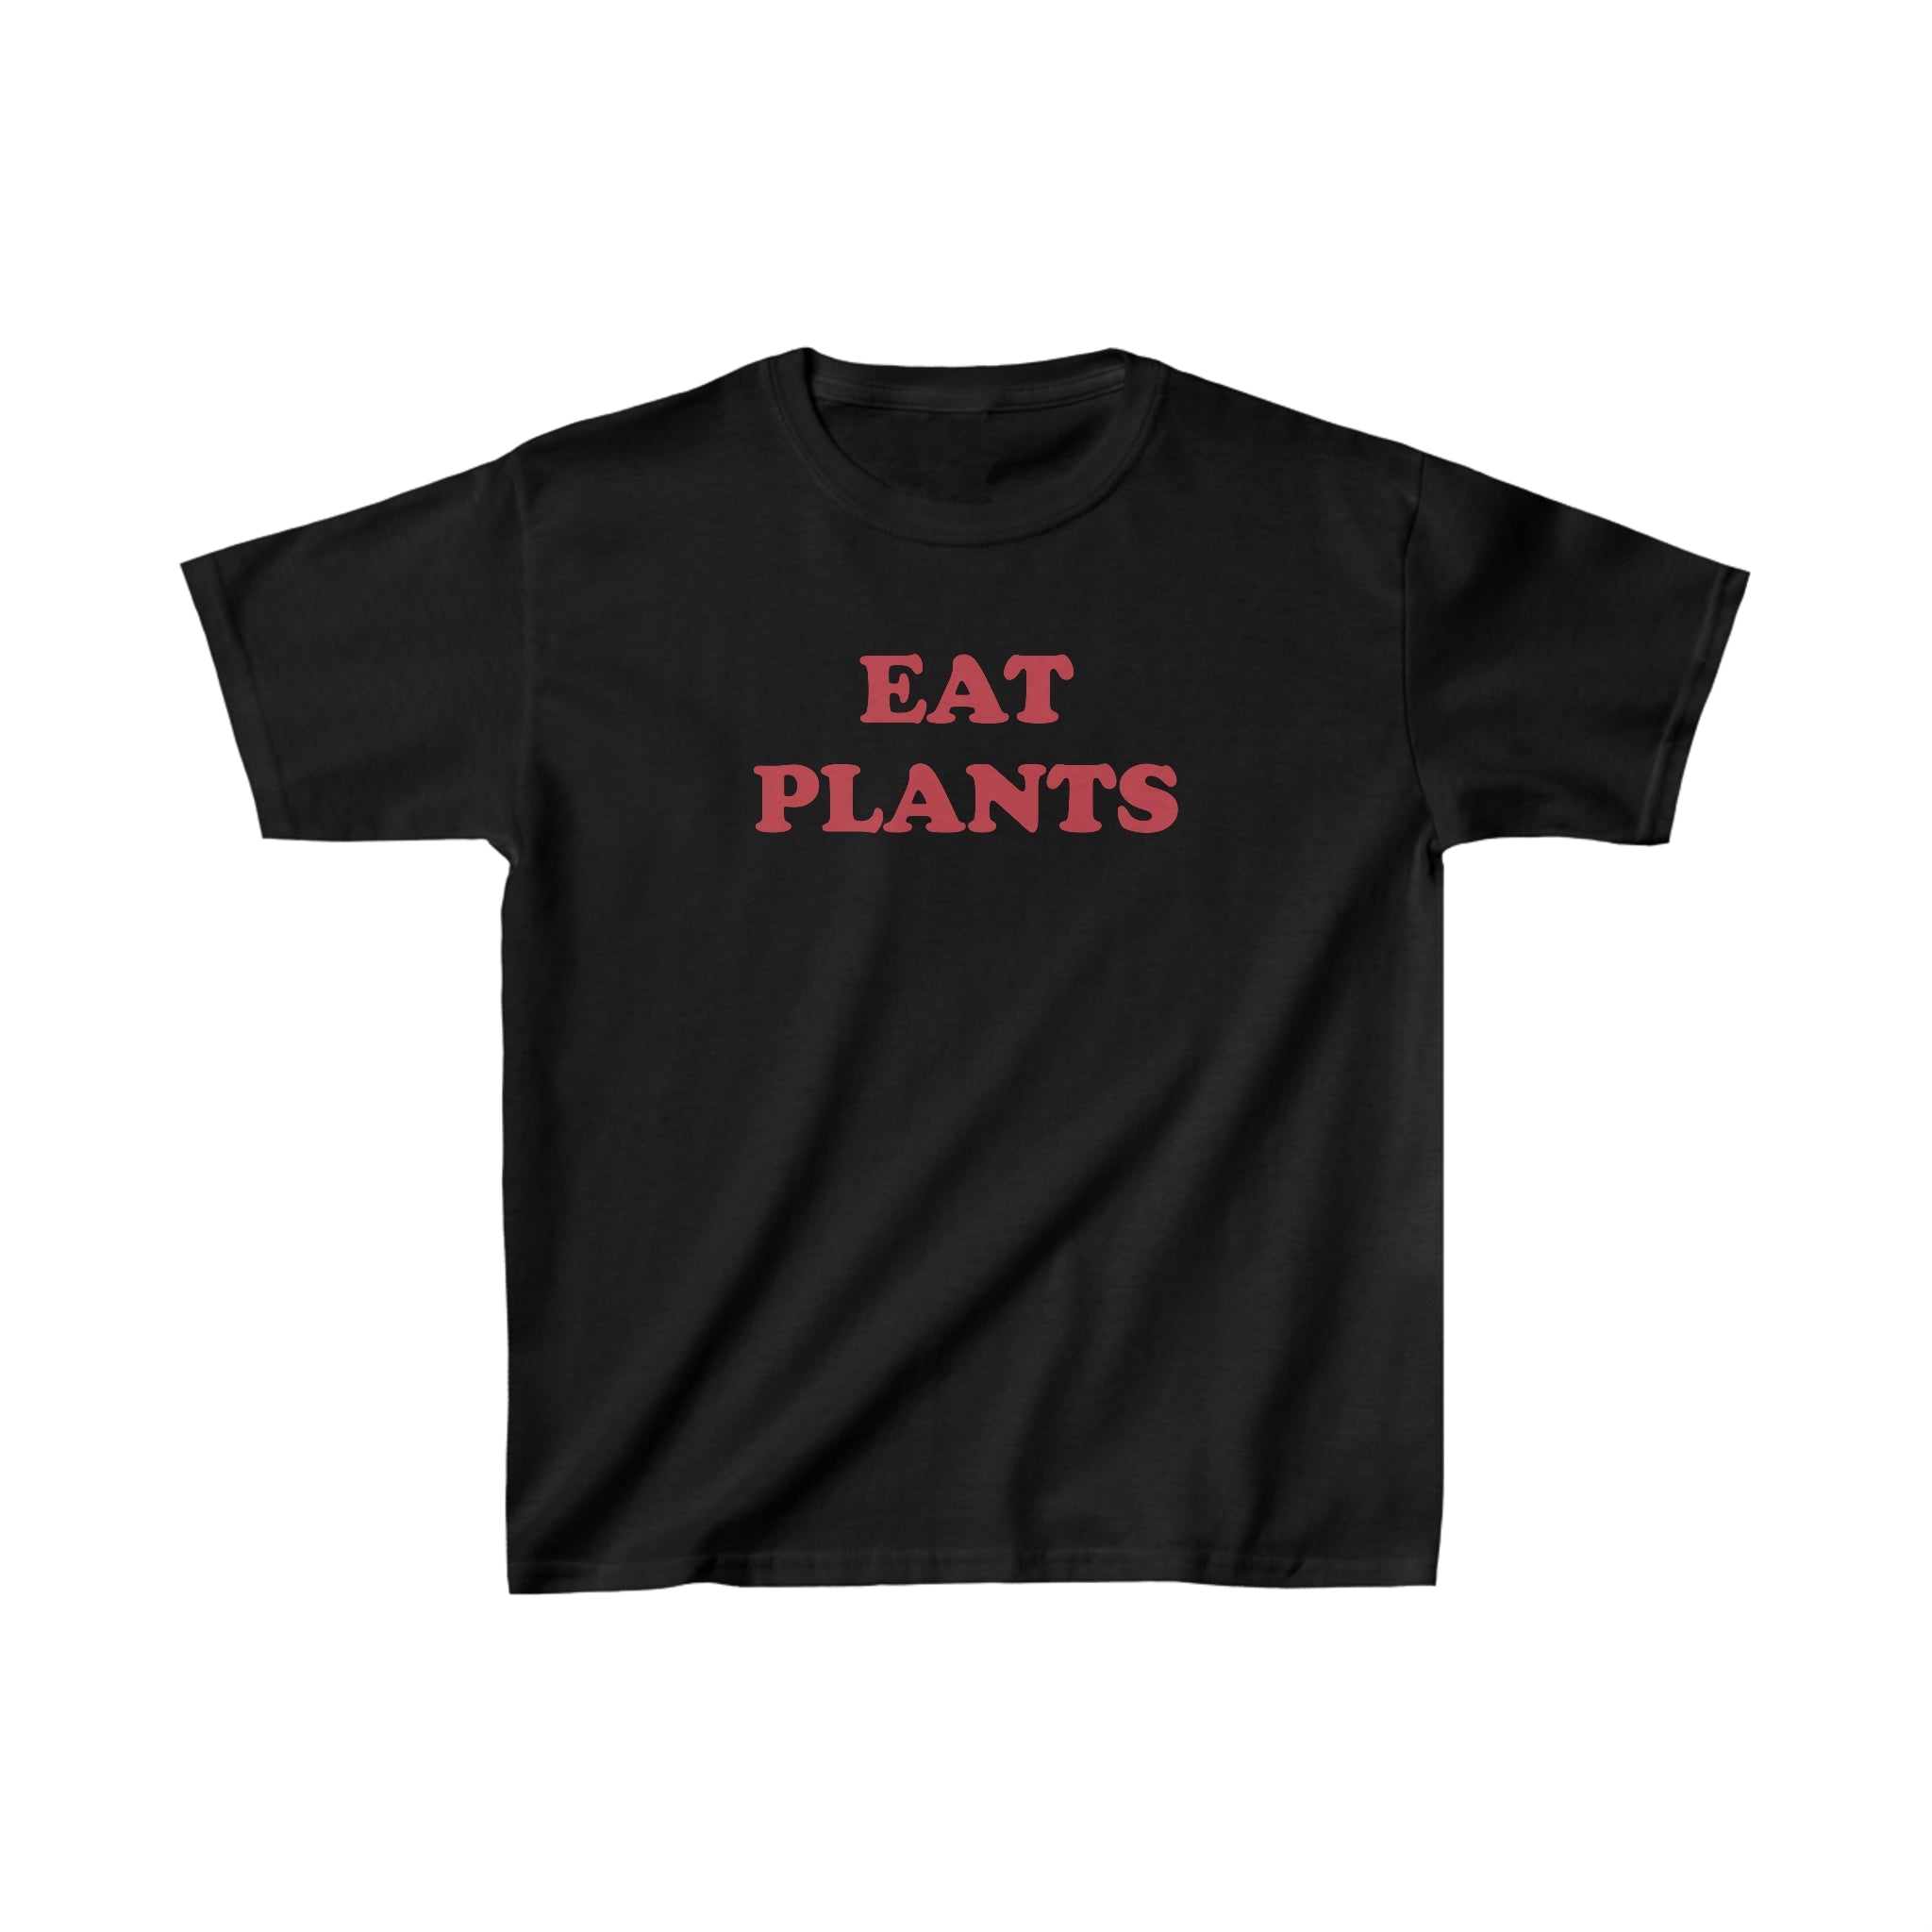 'Eat Plants' baby tee - In Print We Trust